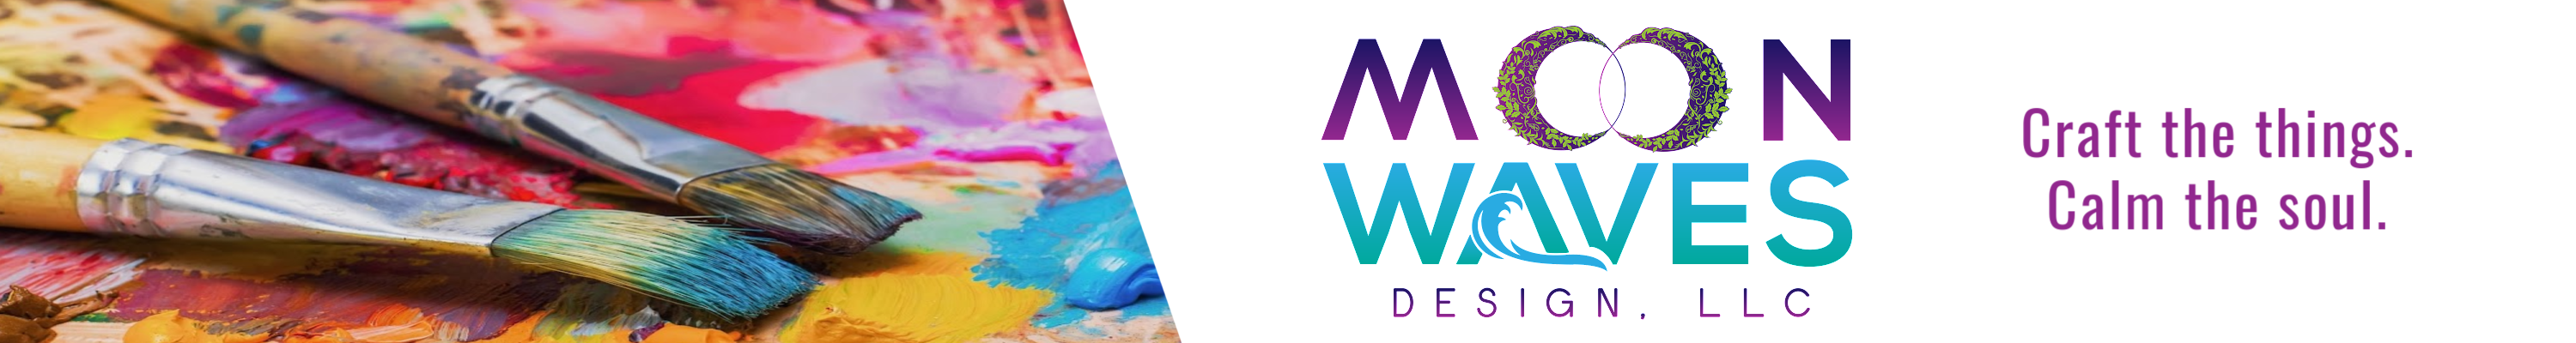 Moon Waves Design Desktop Banner